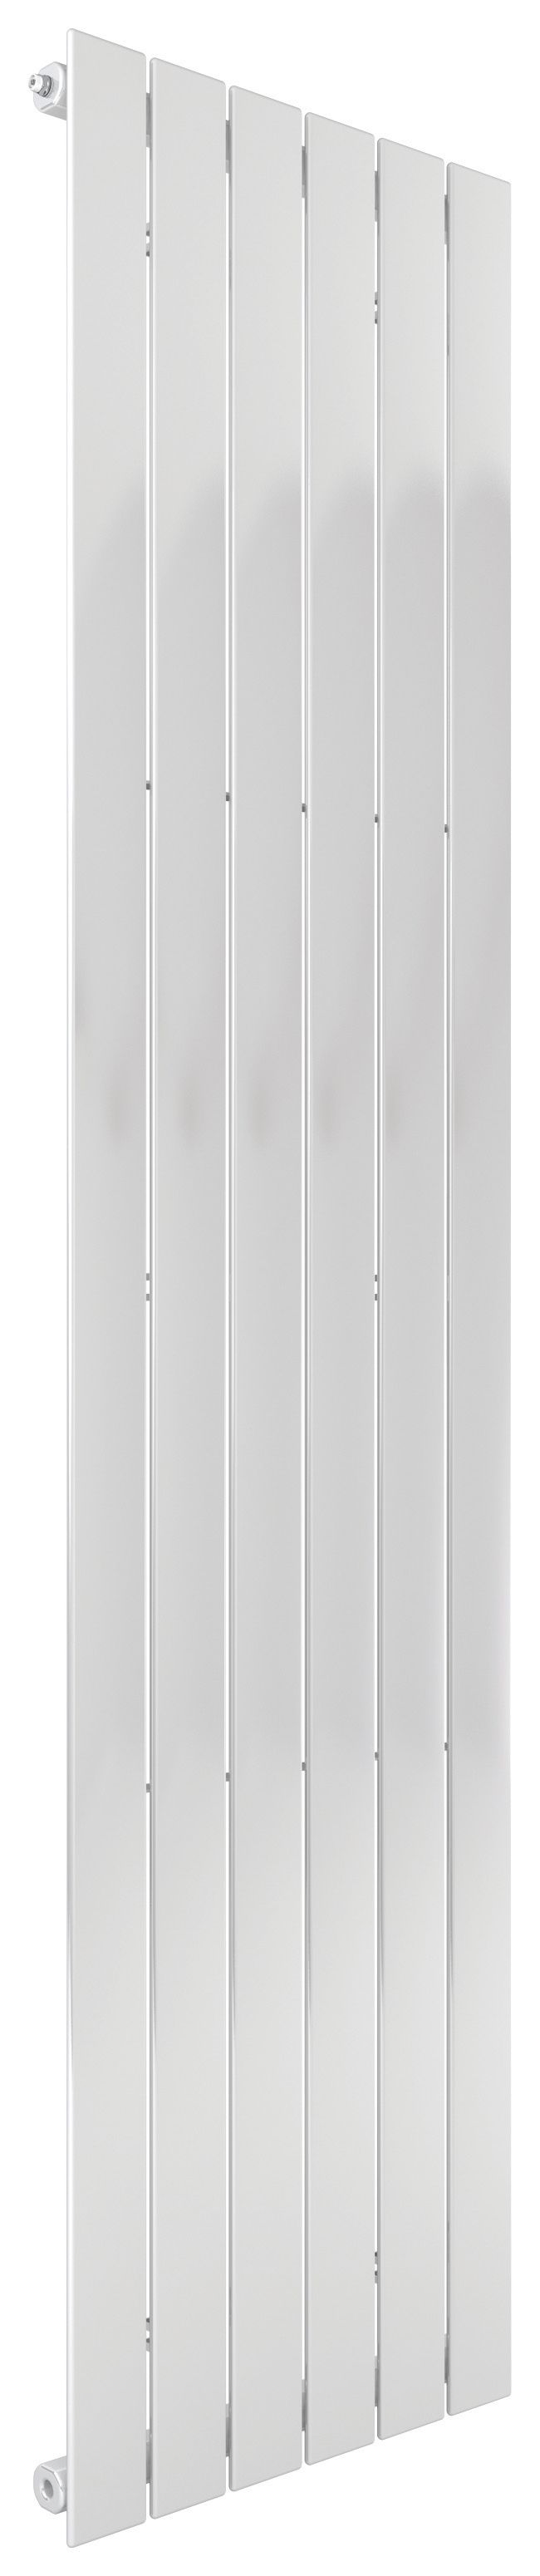 Image of Henrad Verona Vertical Designer Radiator - White 1800 x 736 mm